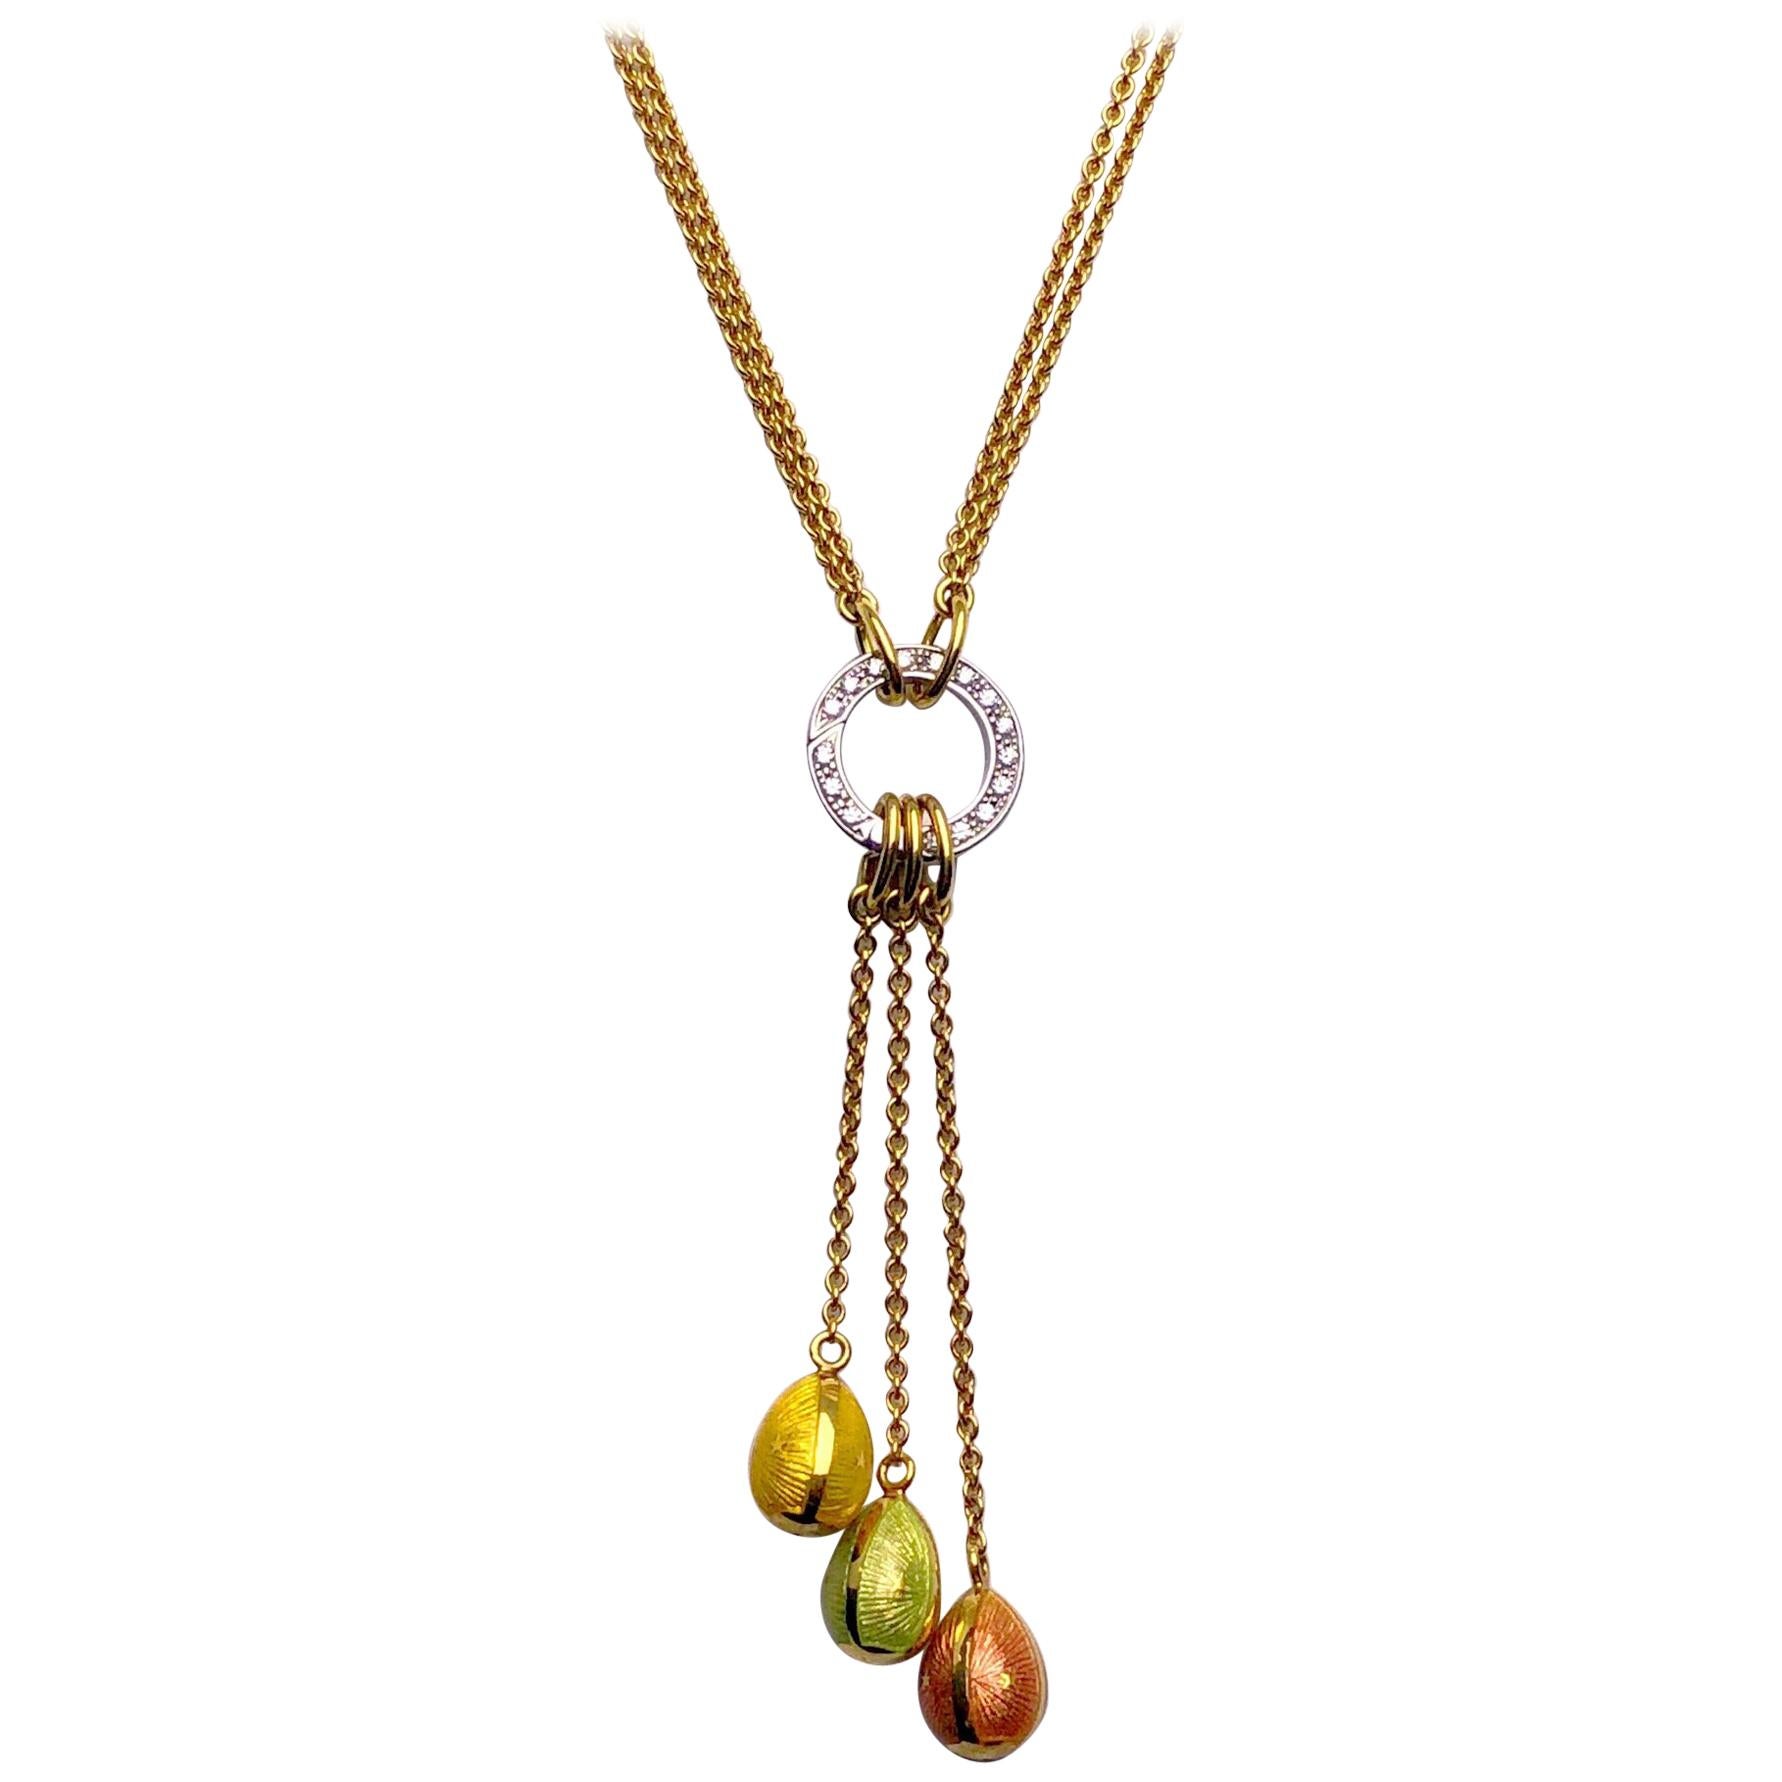 Faberge 18 Karat Gold, Enamel Egg Pendant Necklace with Diamonds, Certificate